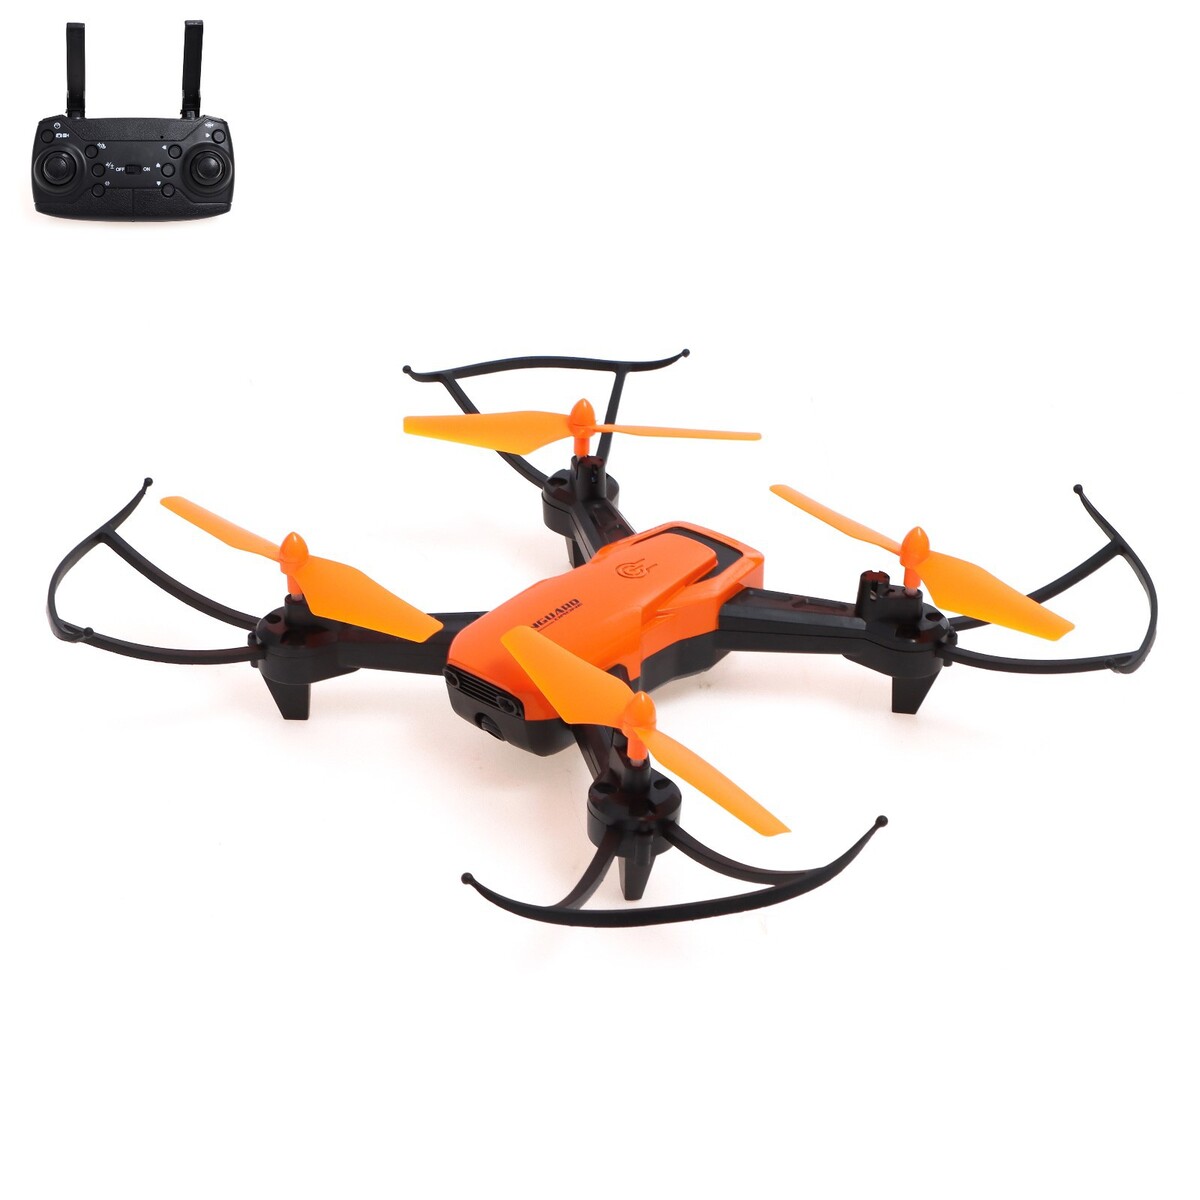 Квадрокоптер lh-x56wf, камера, передача изображения на смартфон, wi-fi, цвет оранжевый как смартфон колю похитил